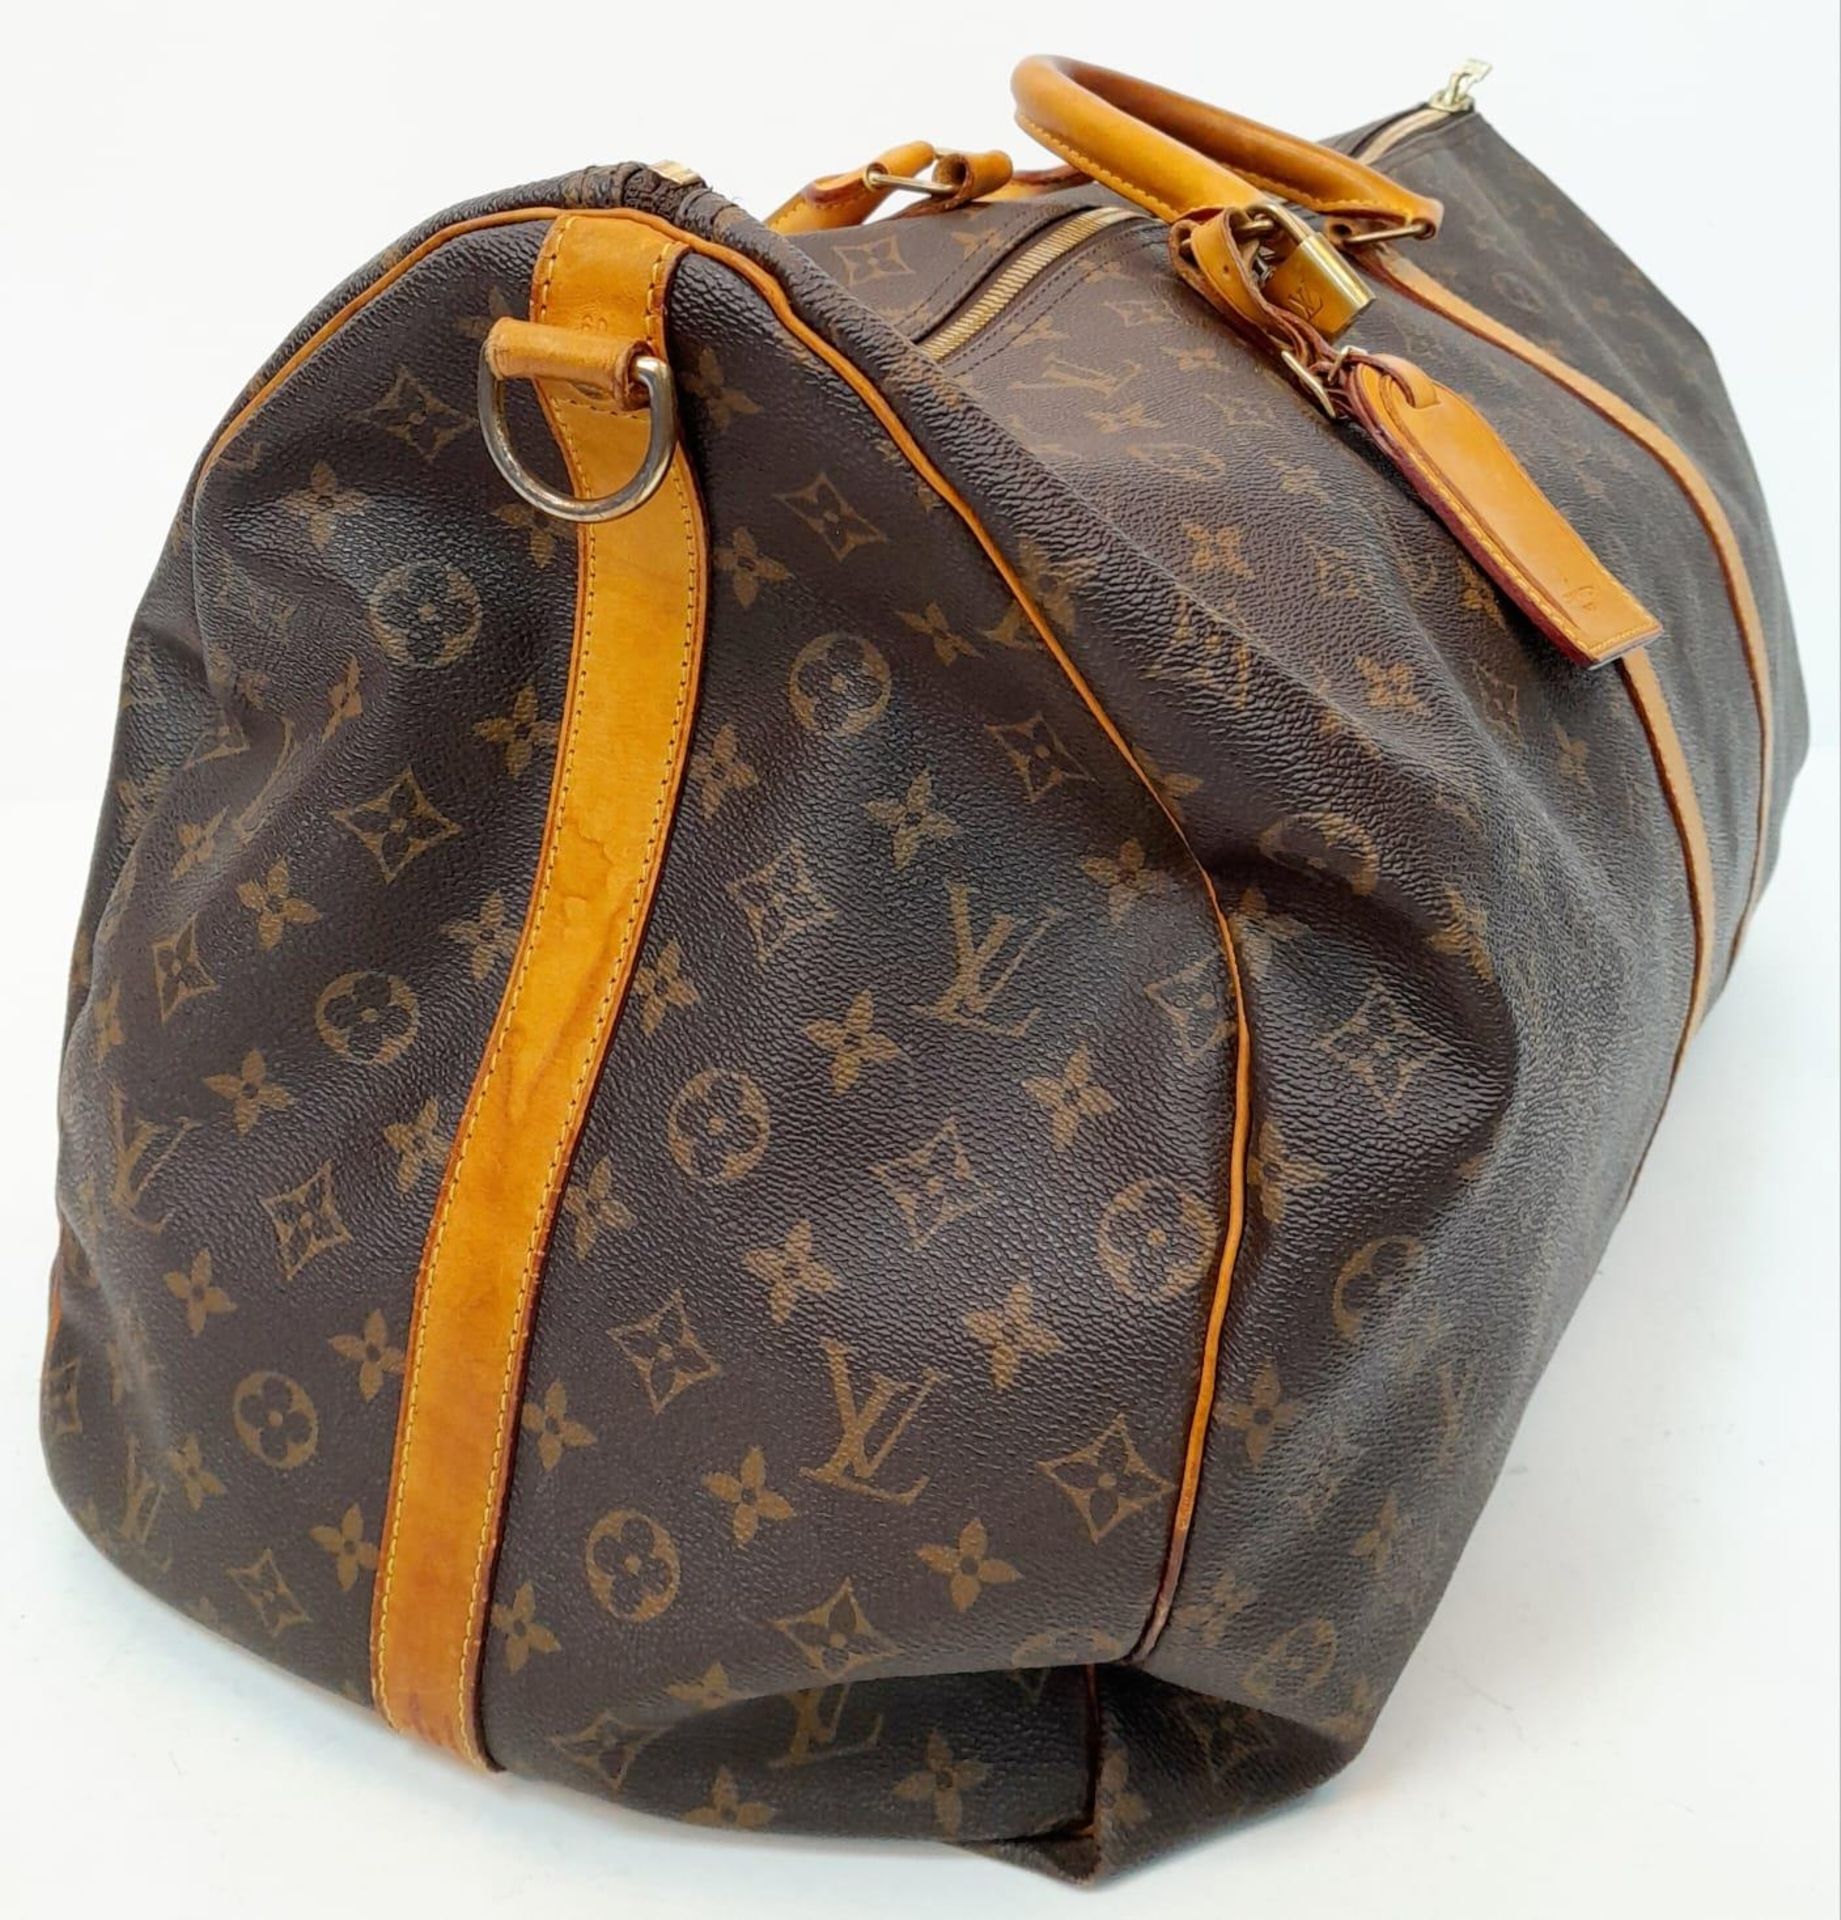 A Large Louis Vuitton Keepall Travel Bag. Monogram LV canvas exterior with cowhide leather handles - Bild 3 aus 8